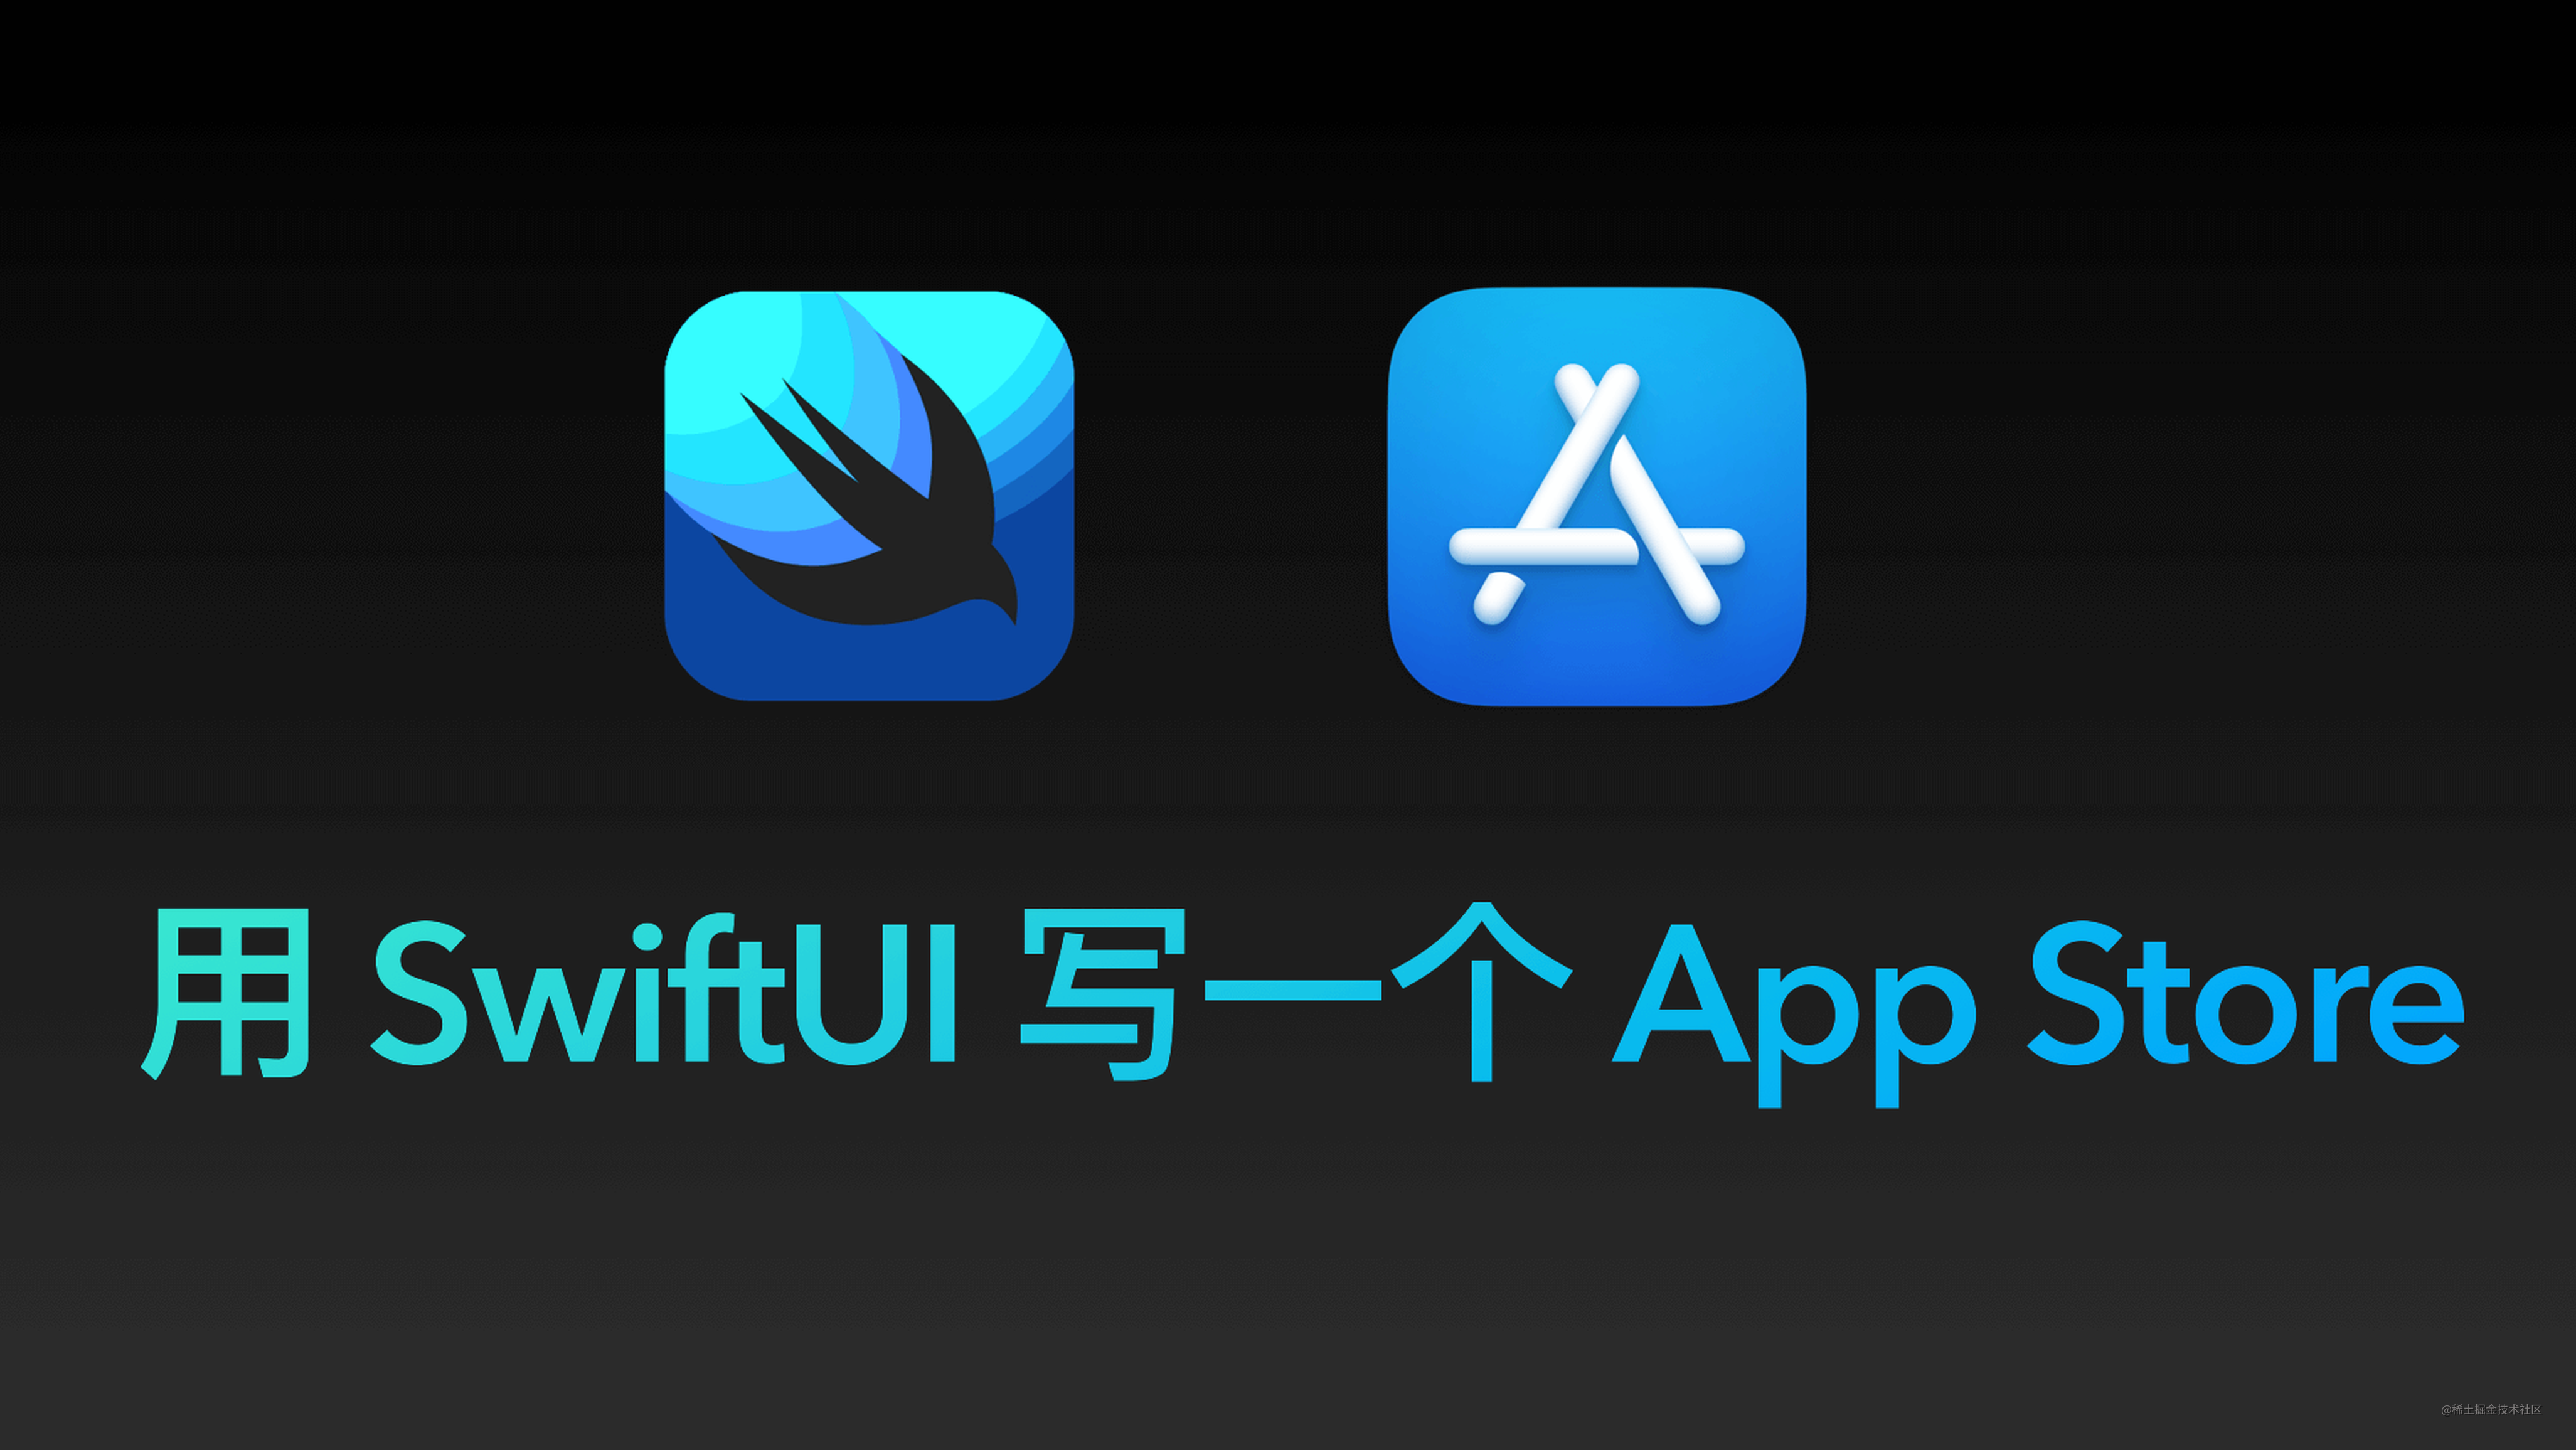 用 SwiftUI 实现一个开源的 App Store